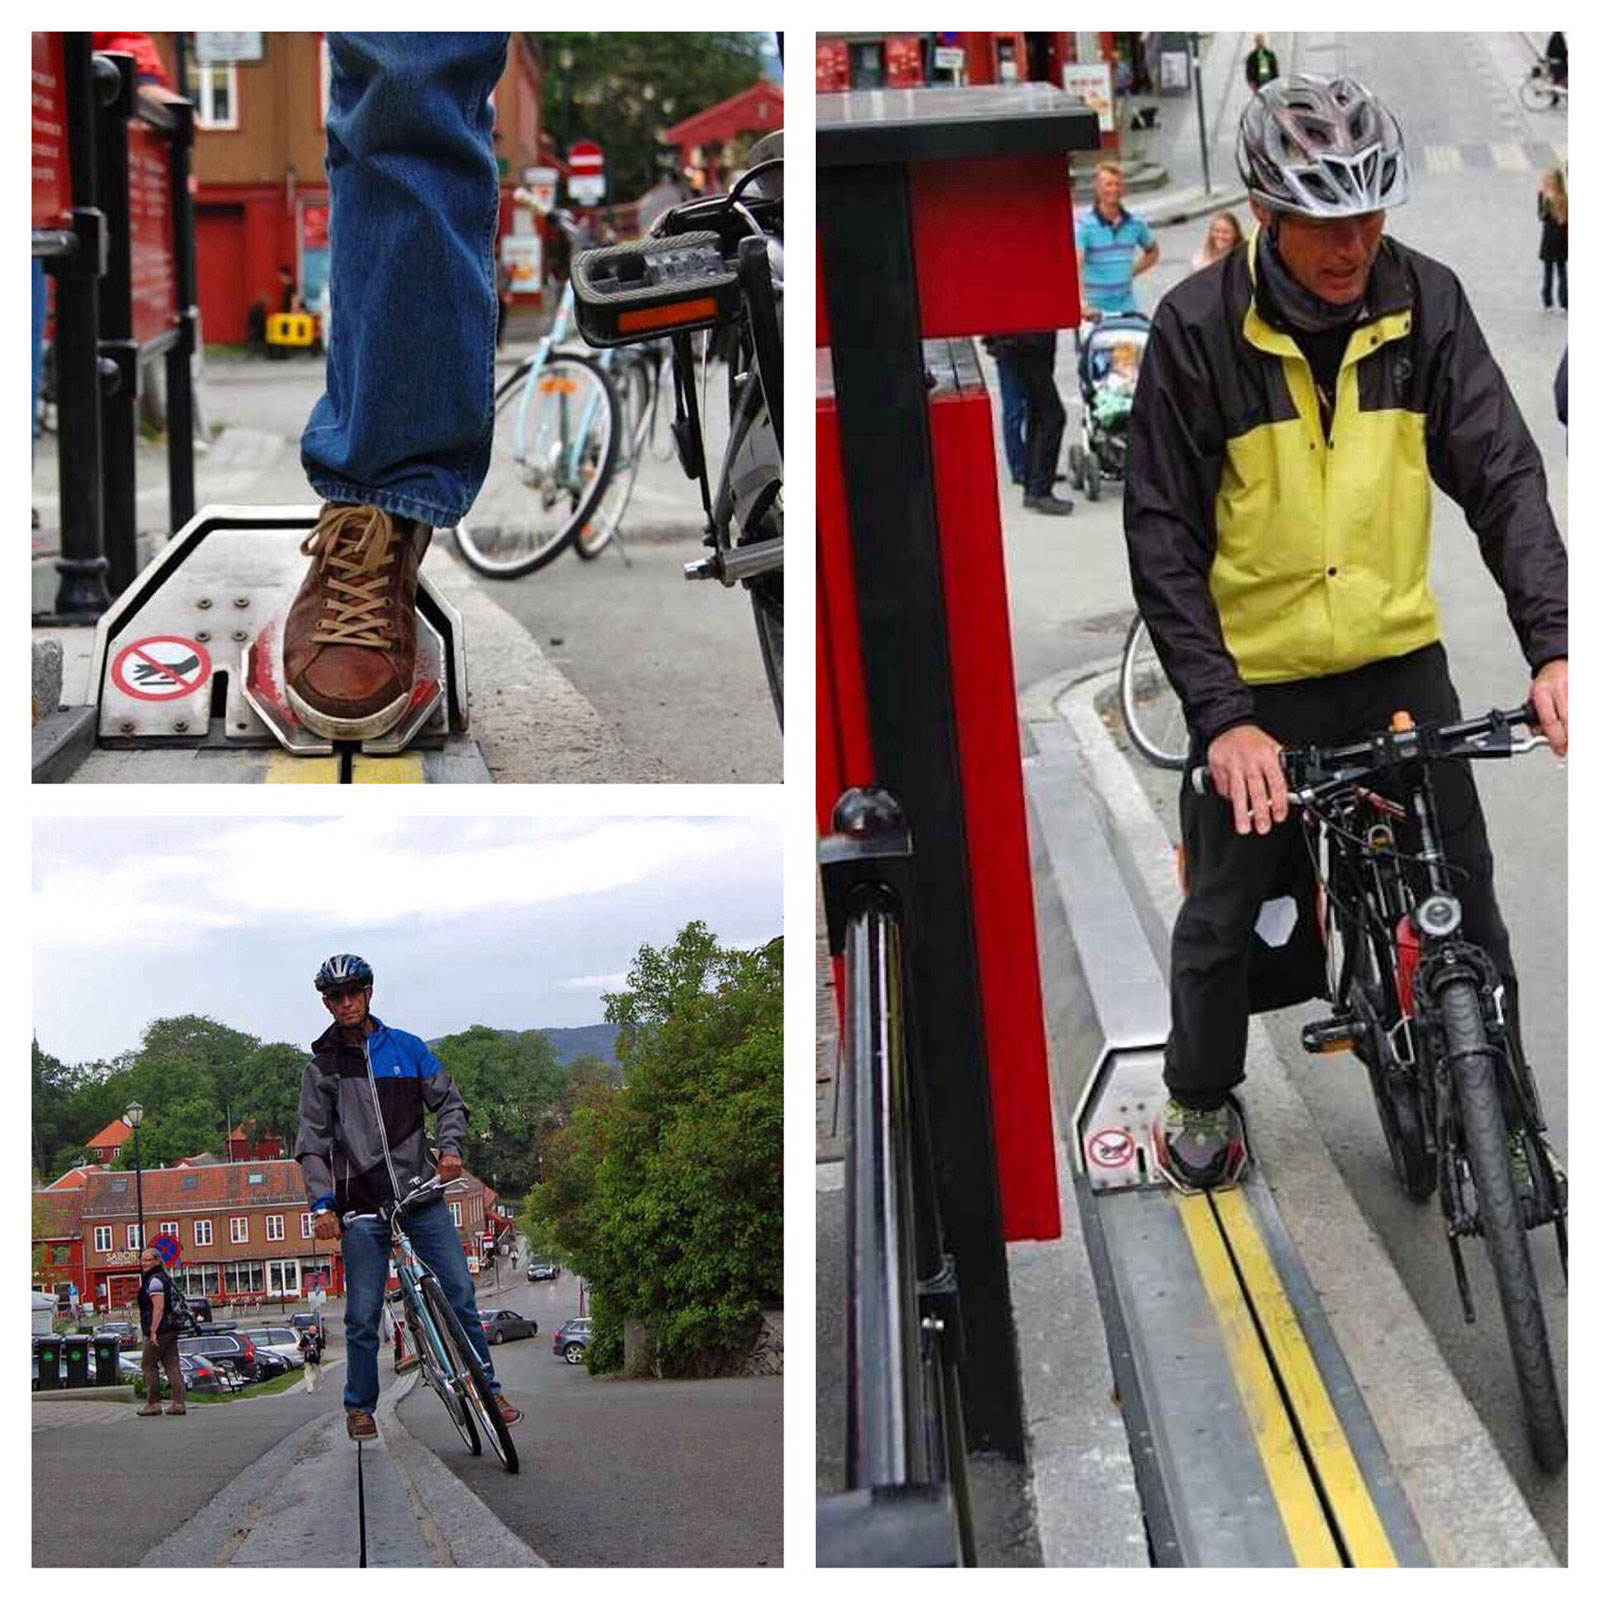 Norway has invented a bicycle escalator